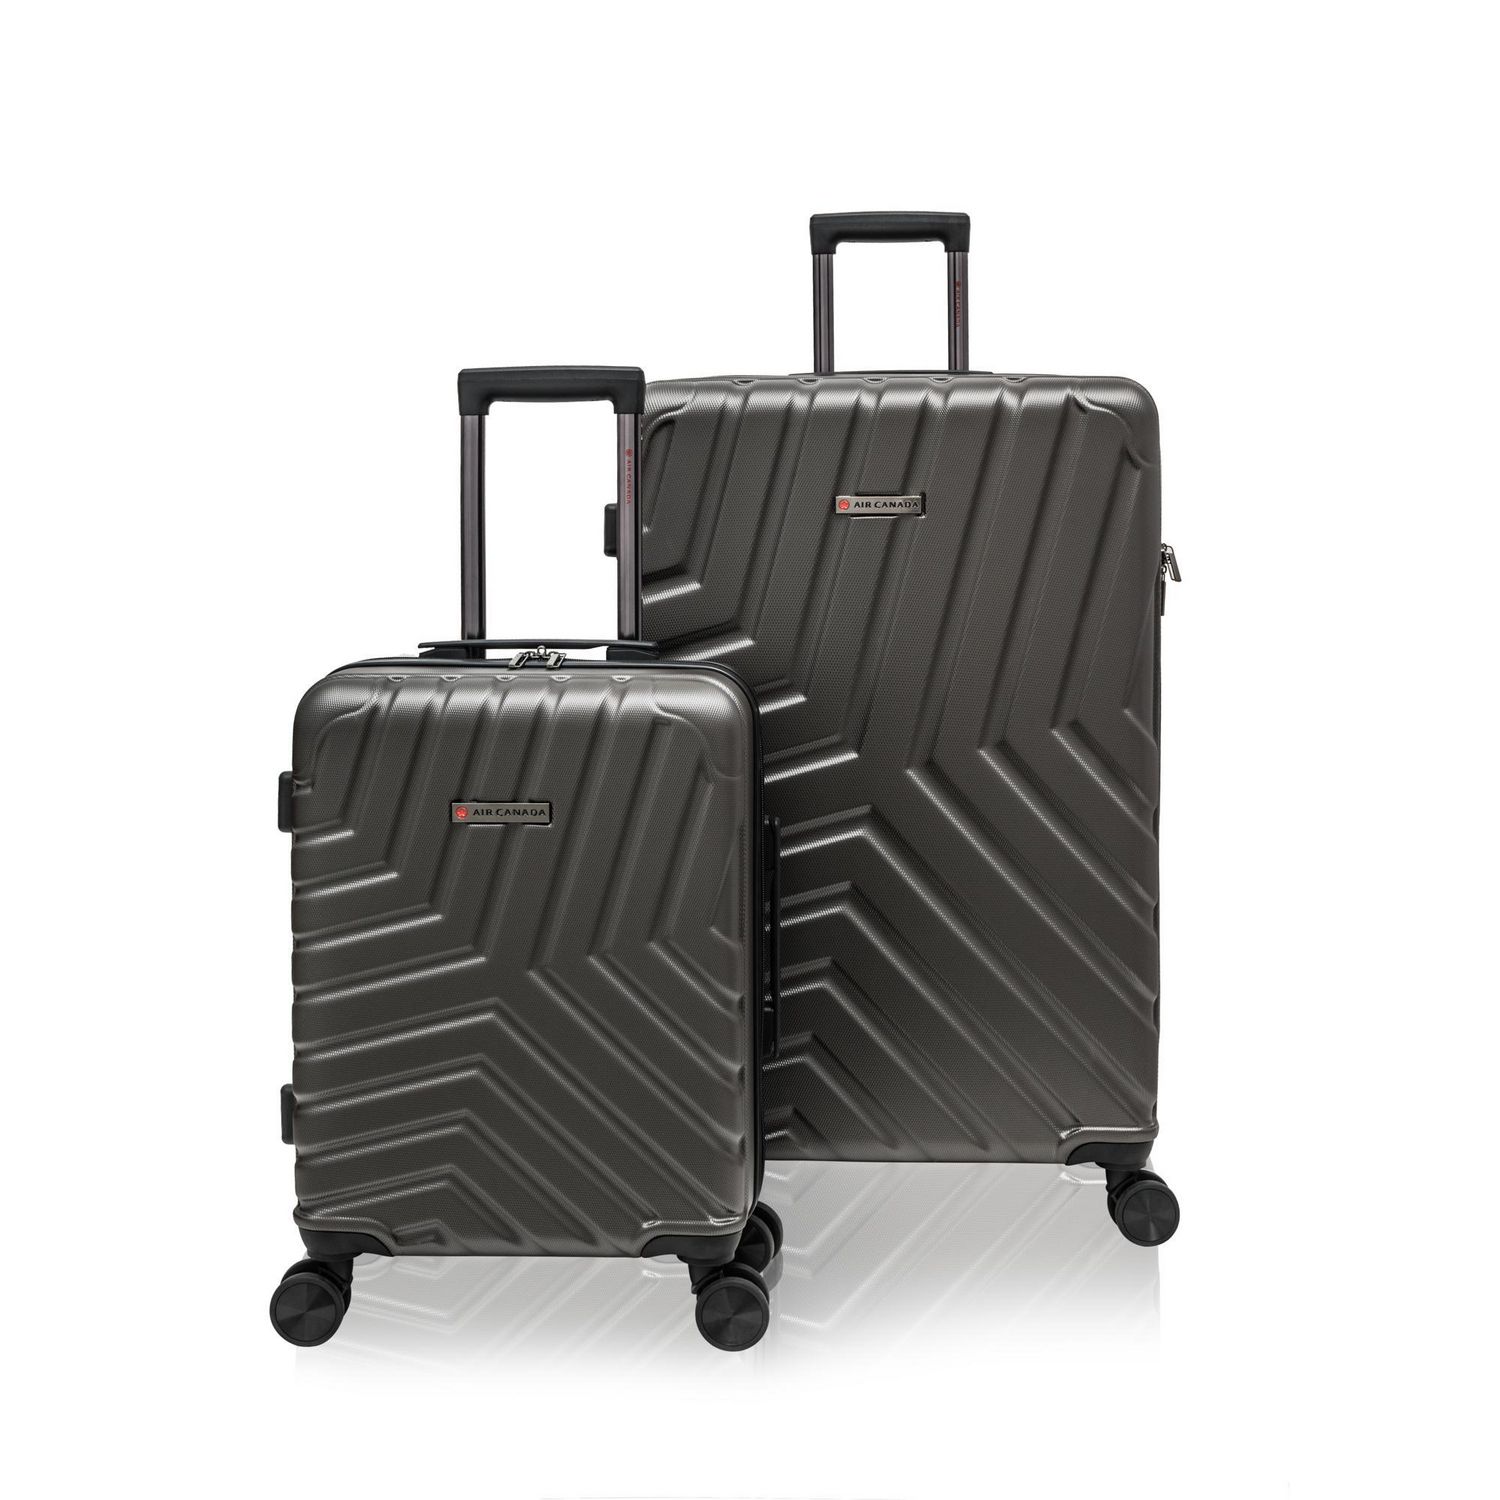 Air Canada Infinite 2-Piece Set Luggage | Walmart Canada